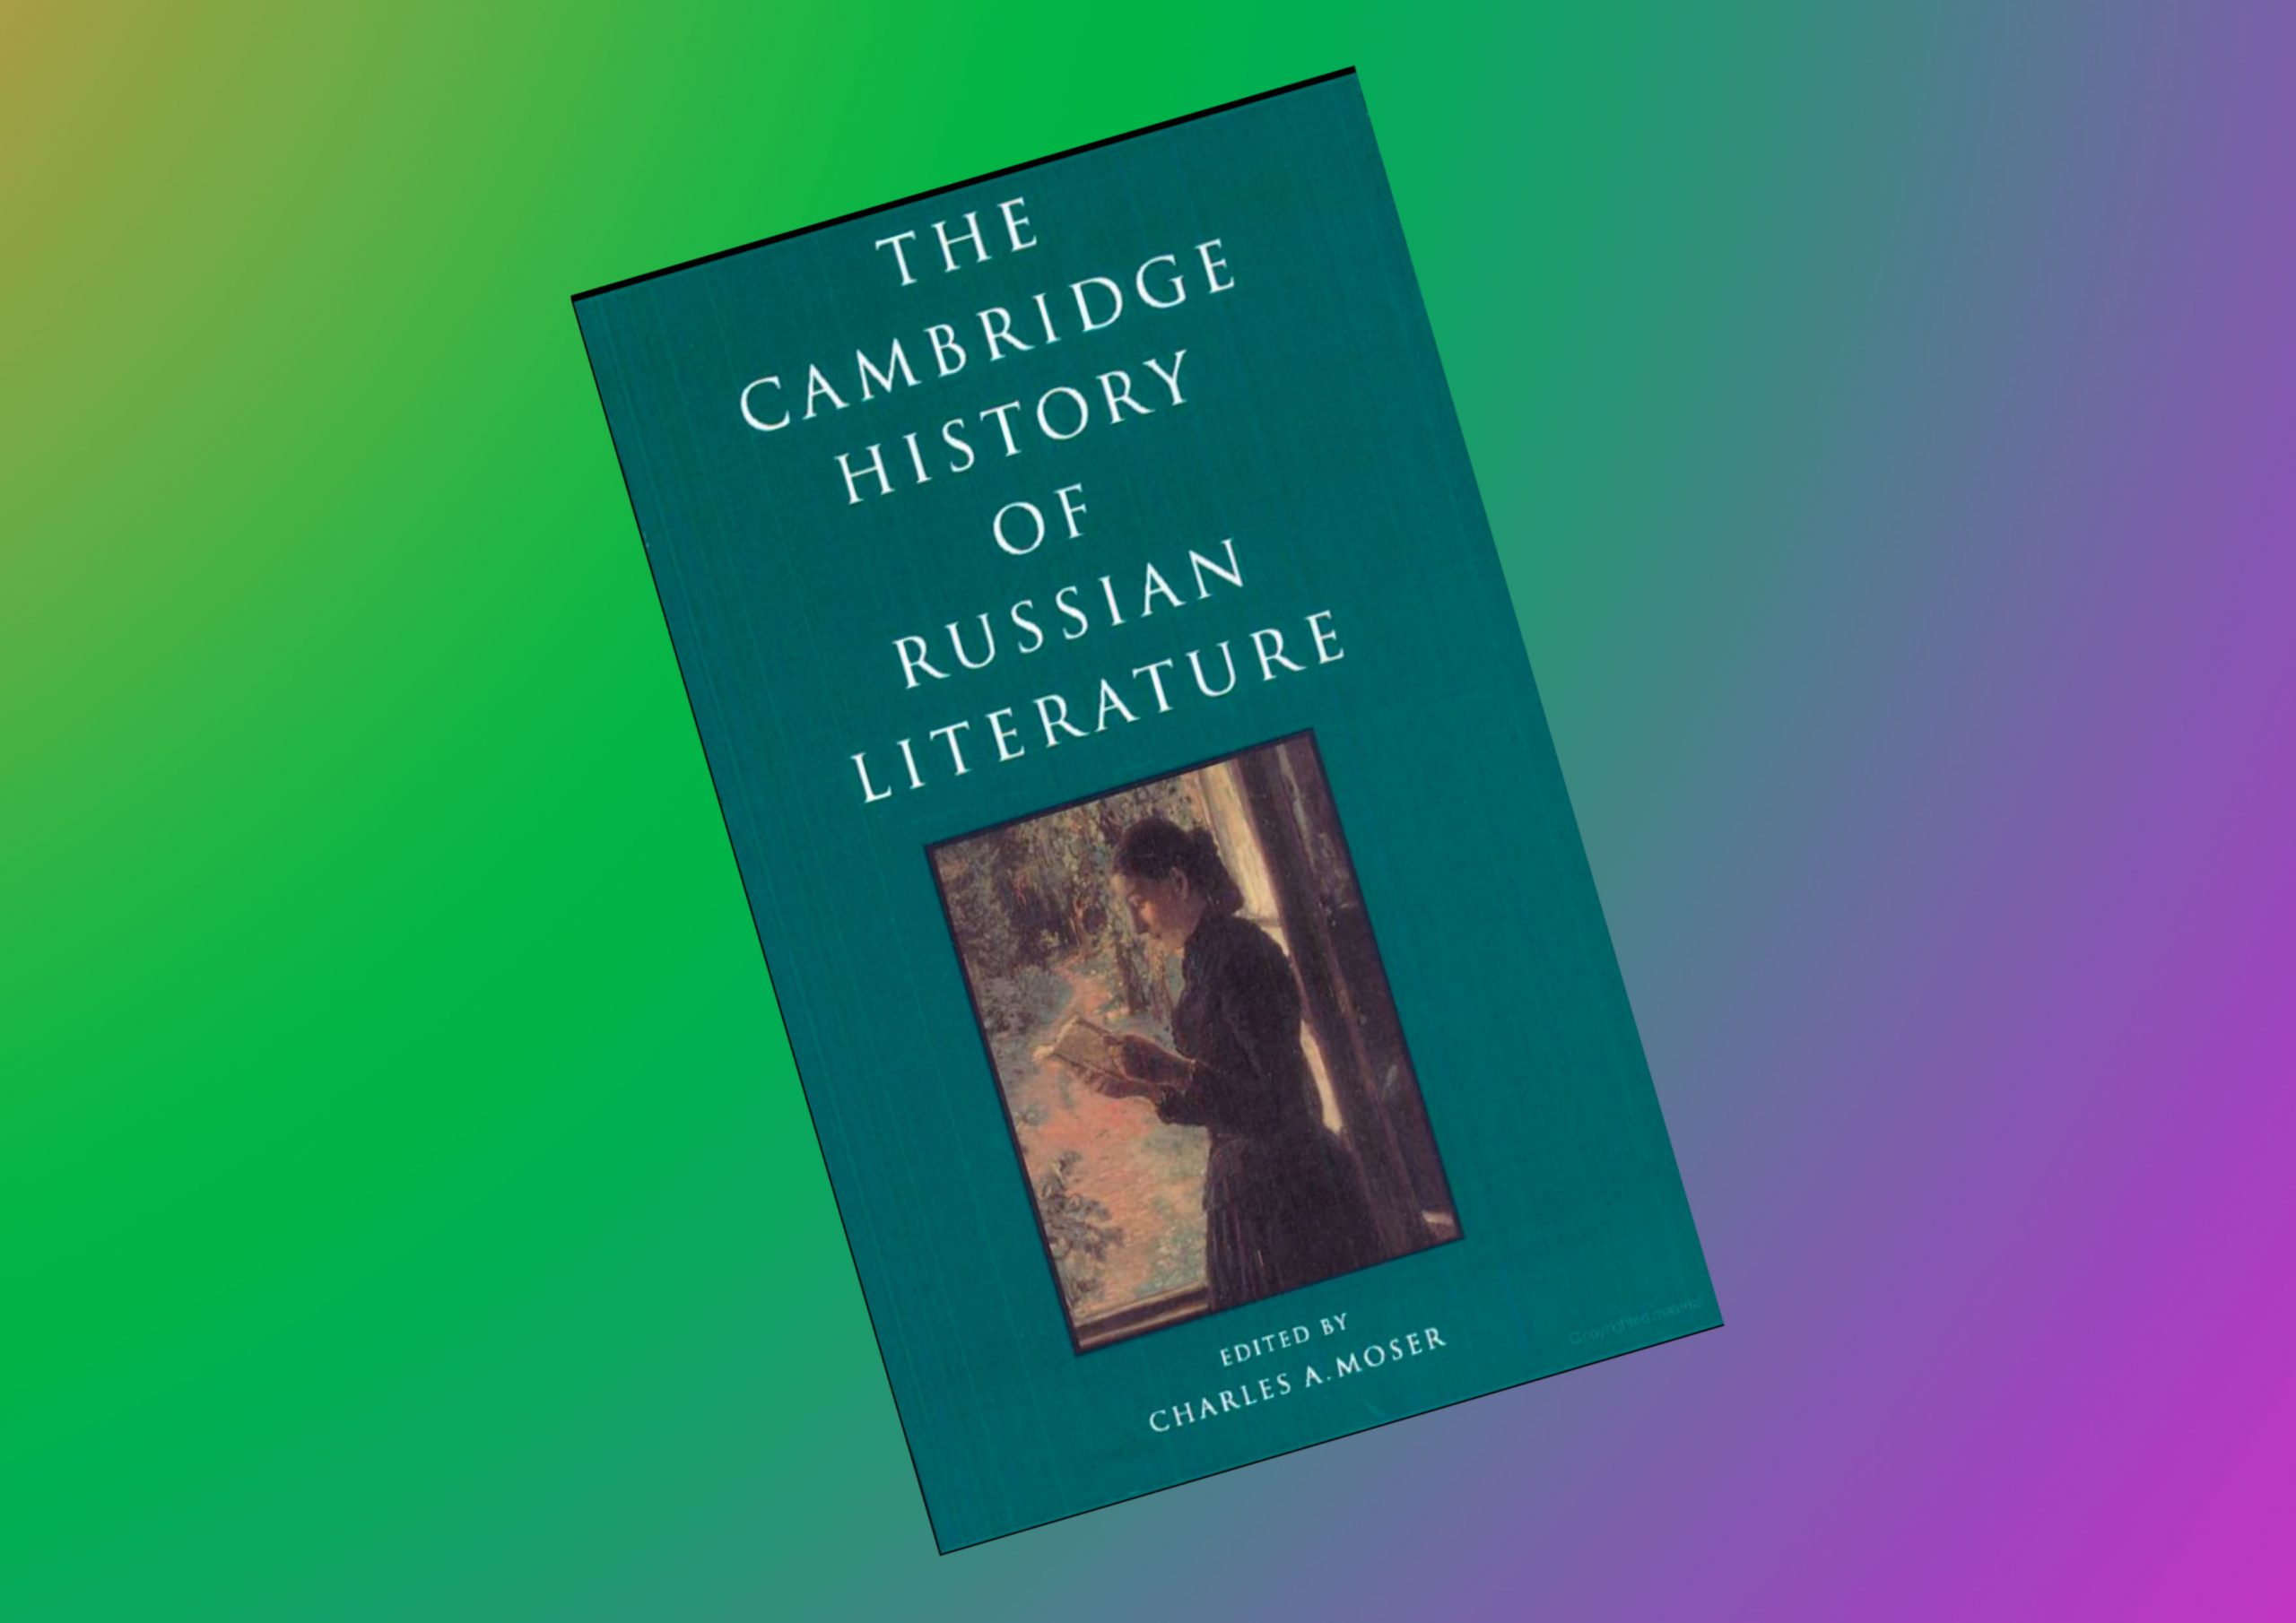 Alexander Zinoviev and The Cambridge history of Russian literature